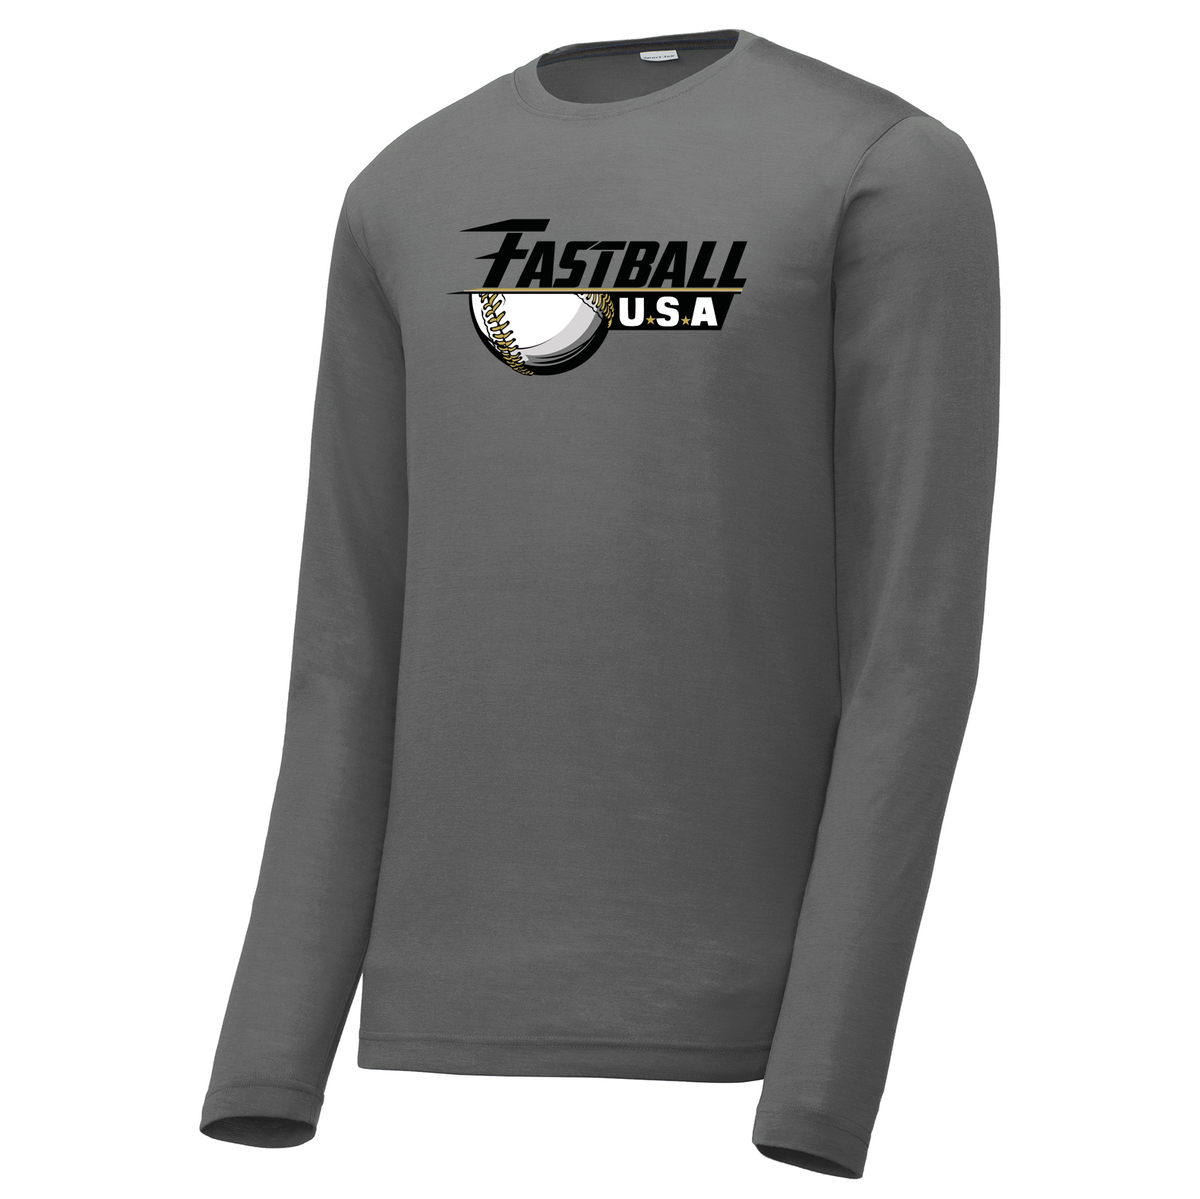 Team Fastball Baseball Long Sleeve CottonTouch Performance Shirt